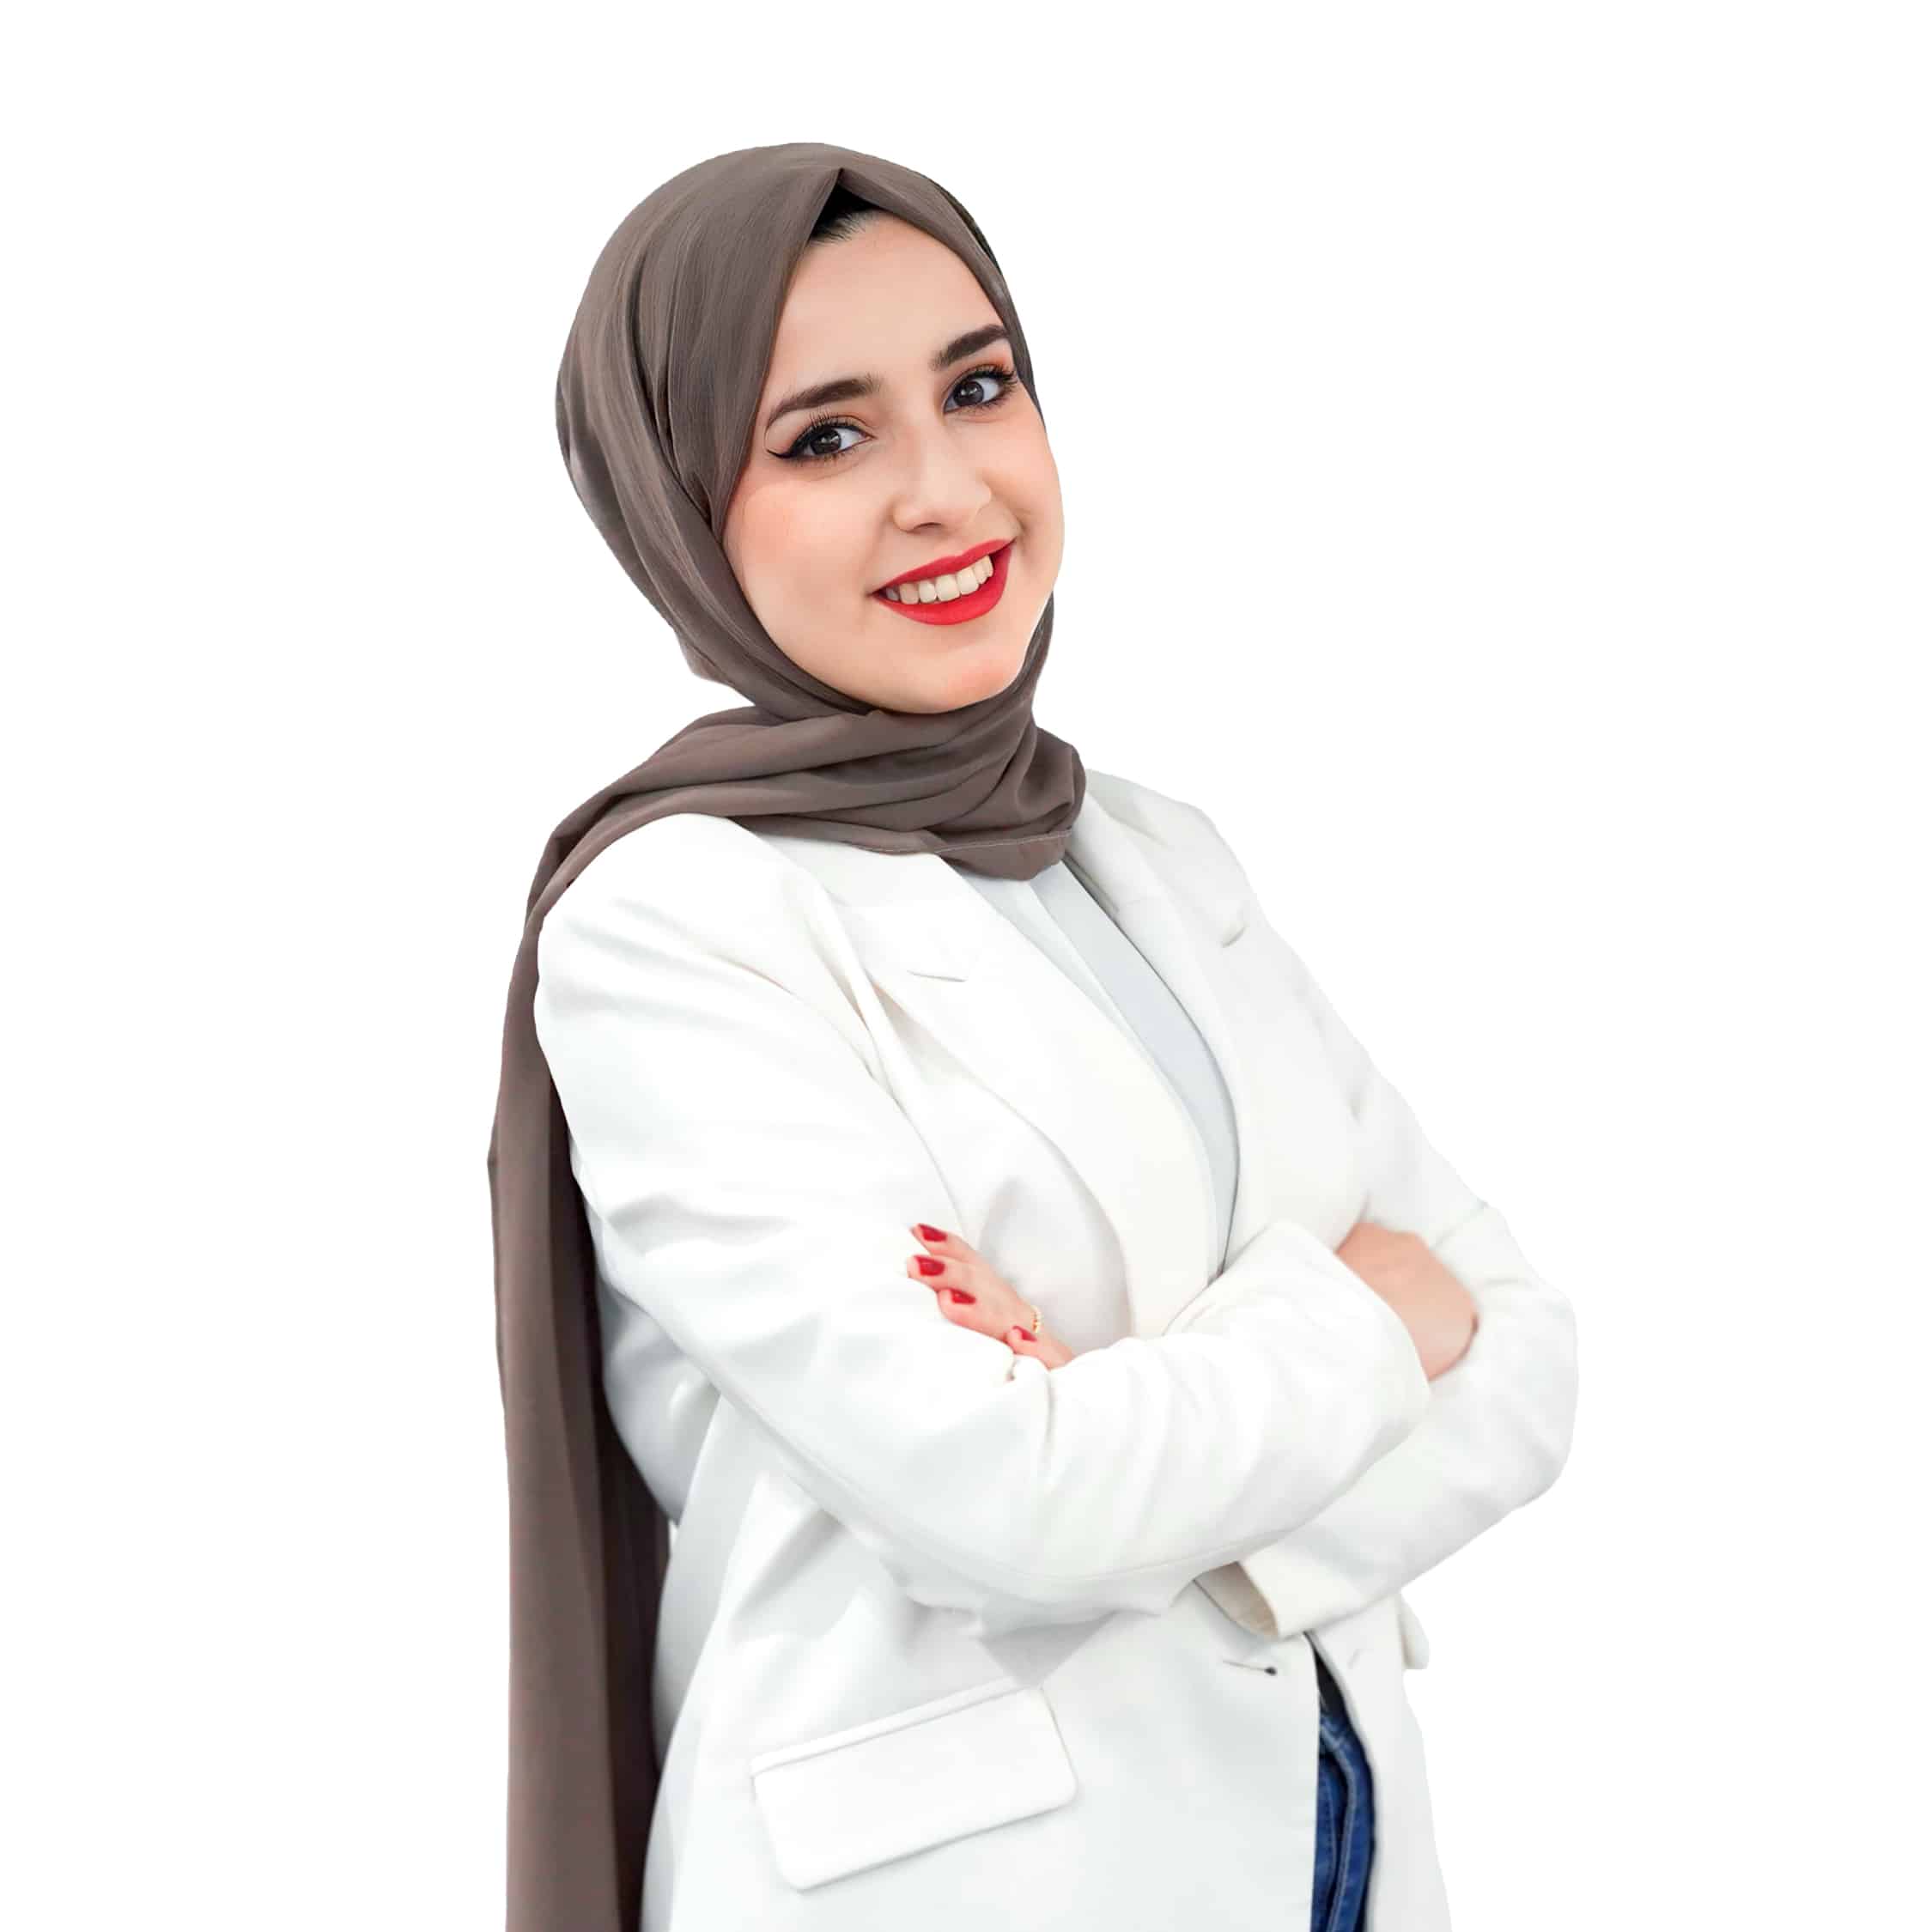 Hebah Tuffaha , Sr. Performance Marketing Specialist